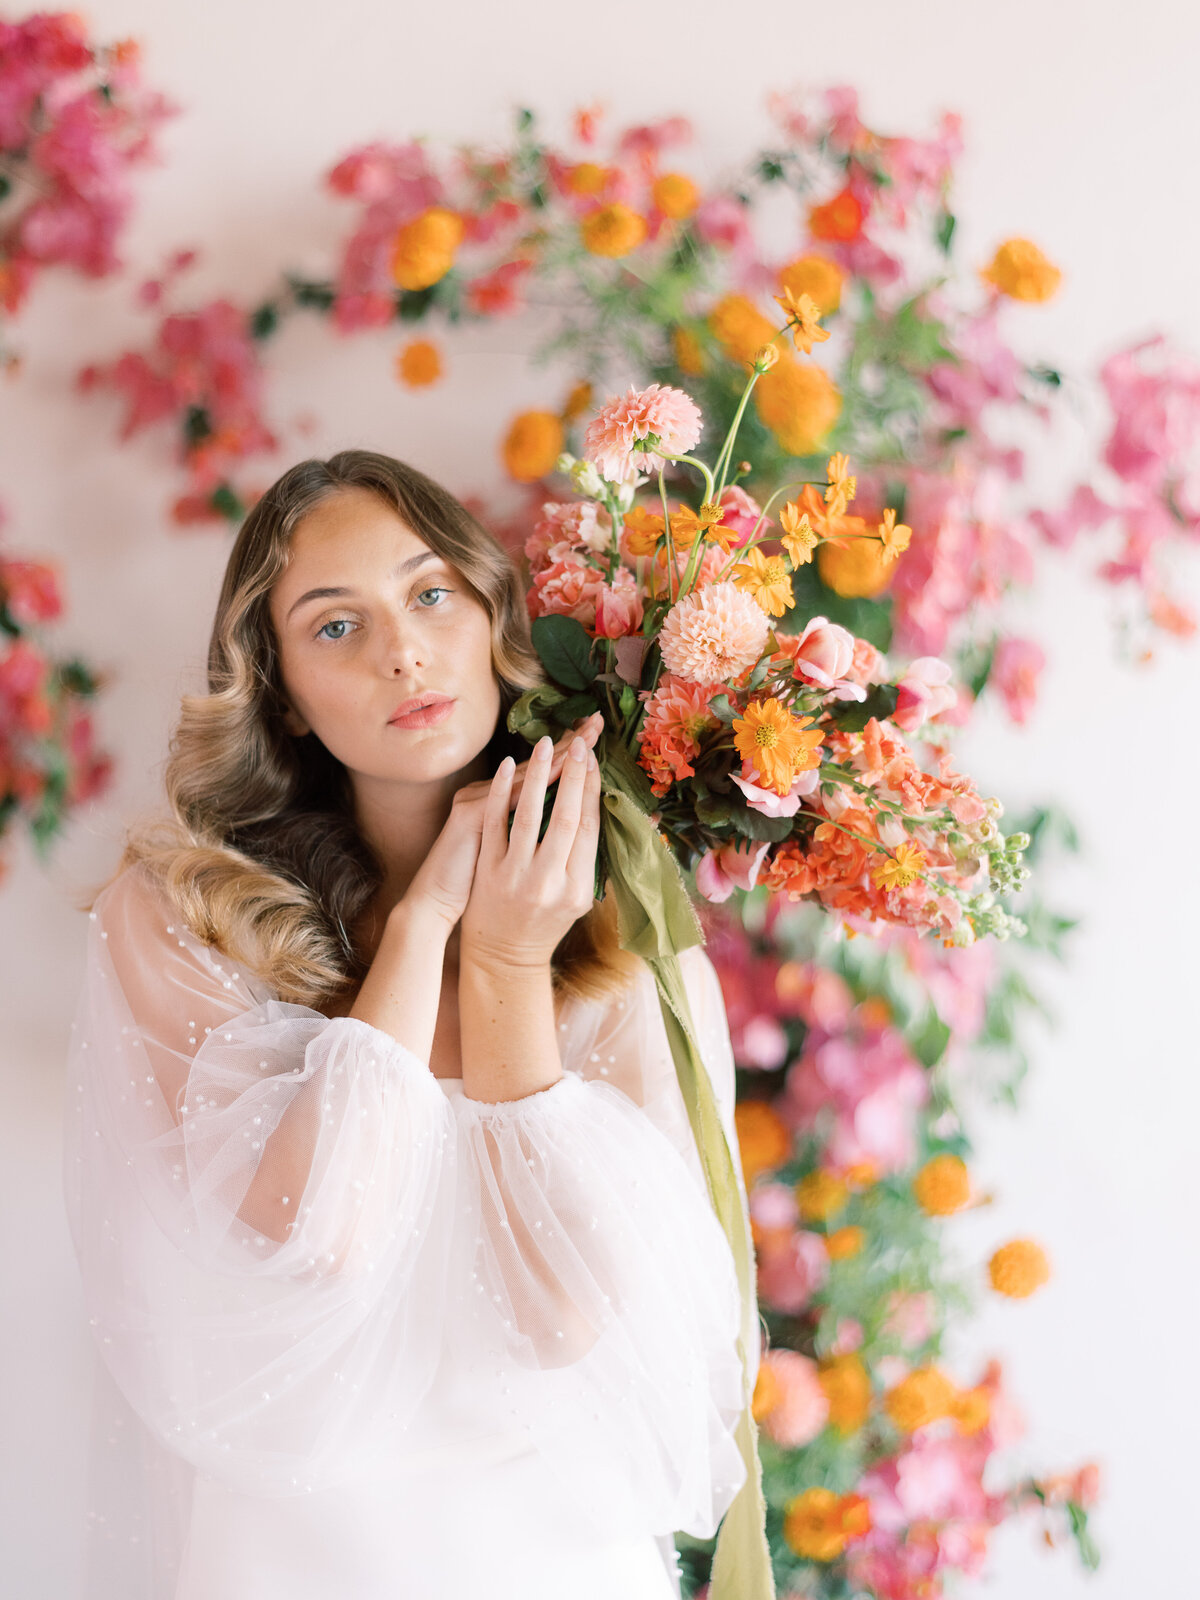 Sarah Rae Floral Designs Wedding Event Florist Flowers Kentucky Chic Whimsical Romantic Weddings29